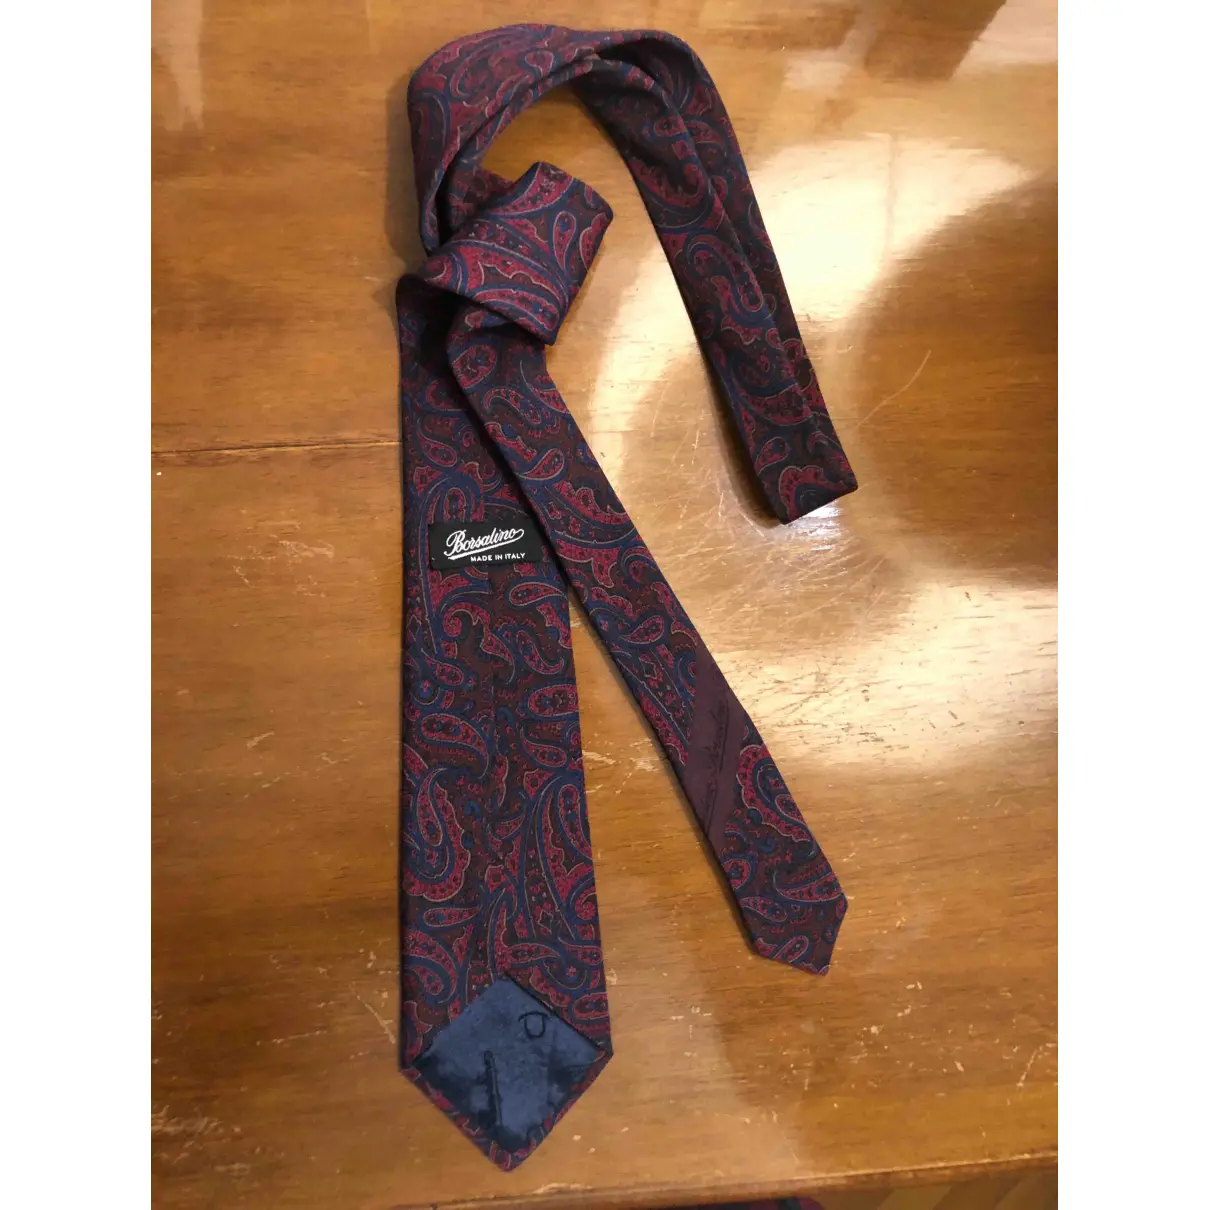 Buy Borsalino Silk tie online